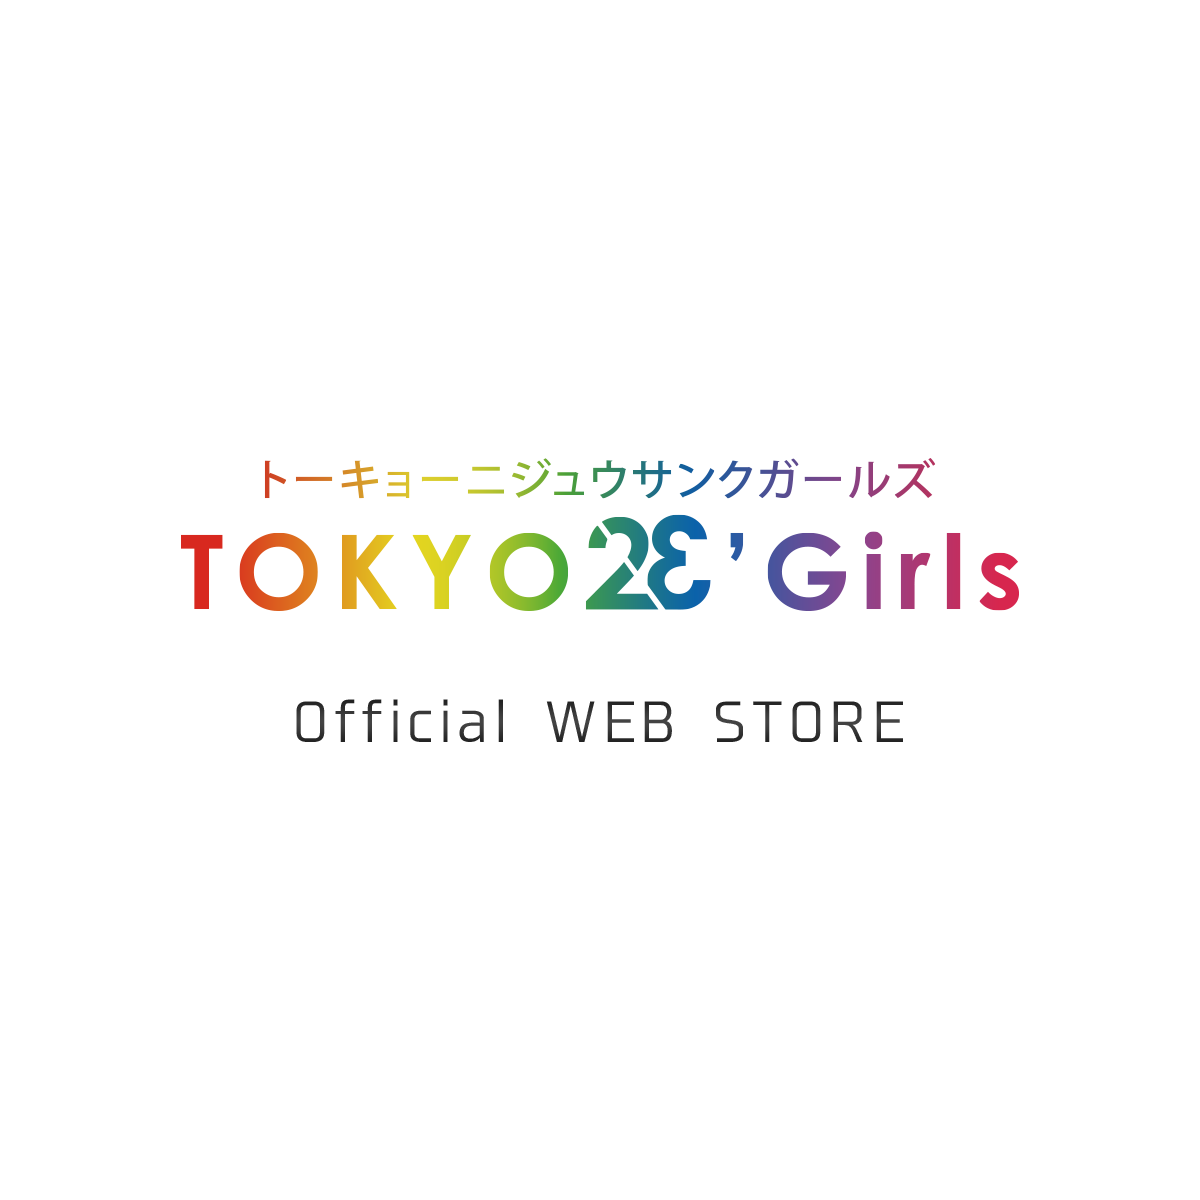 Tokyo23girls Official Web Store